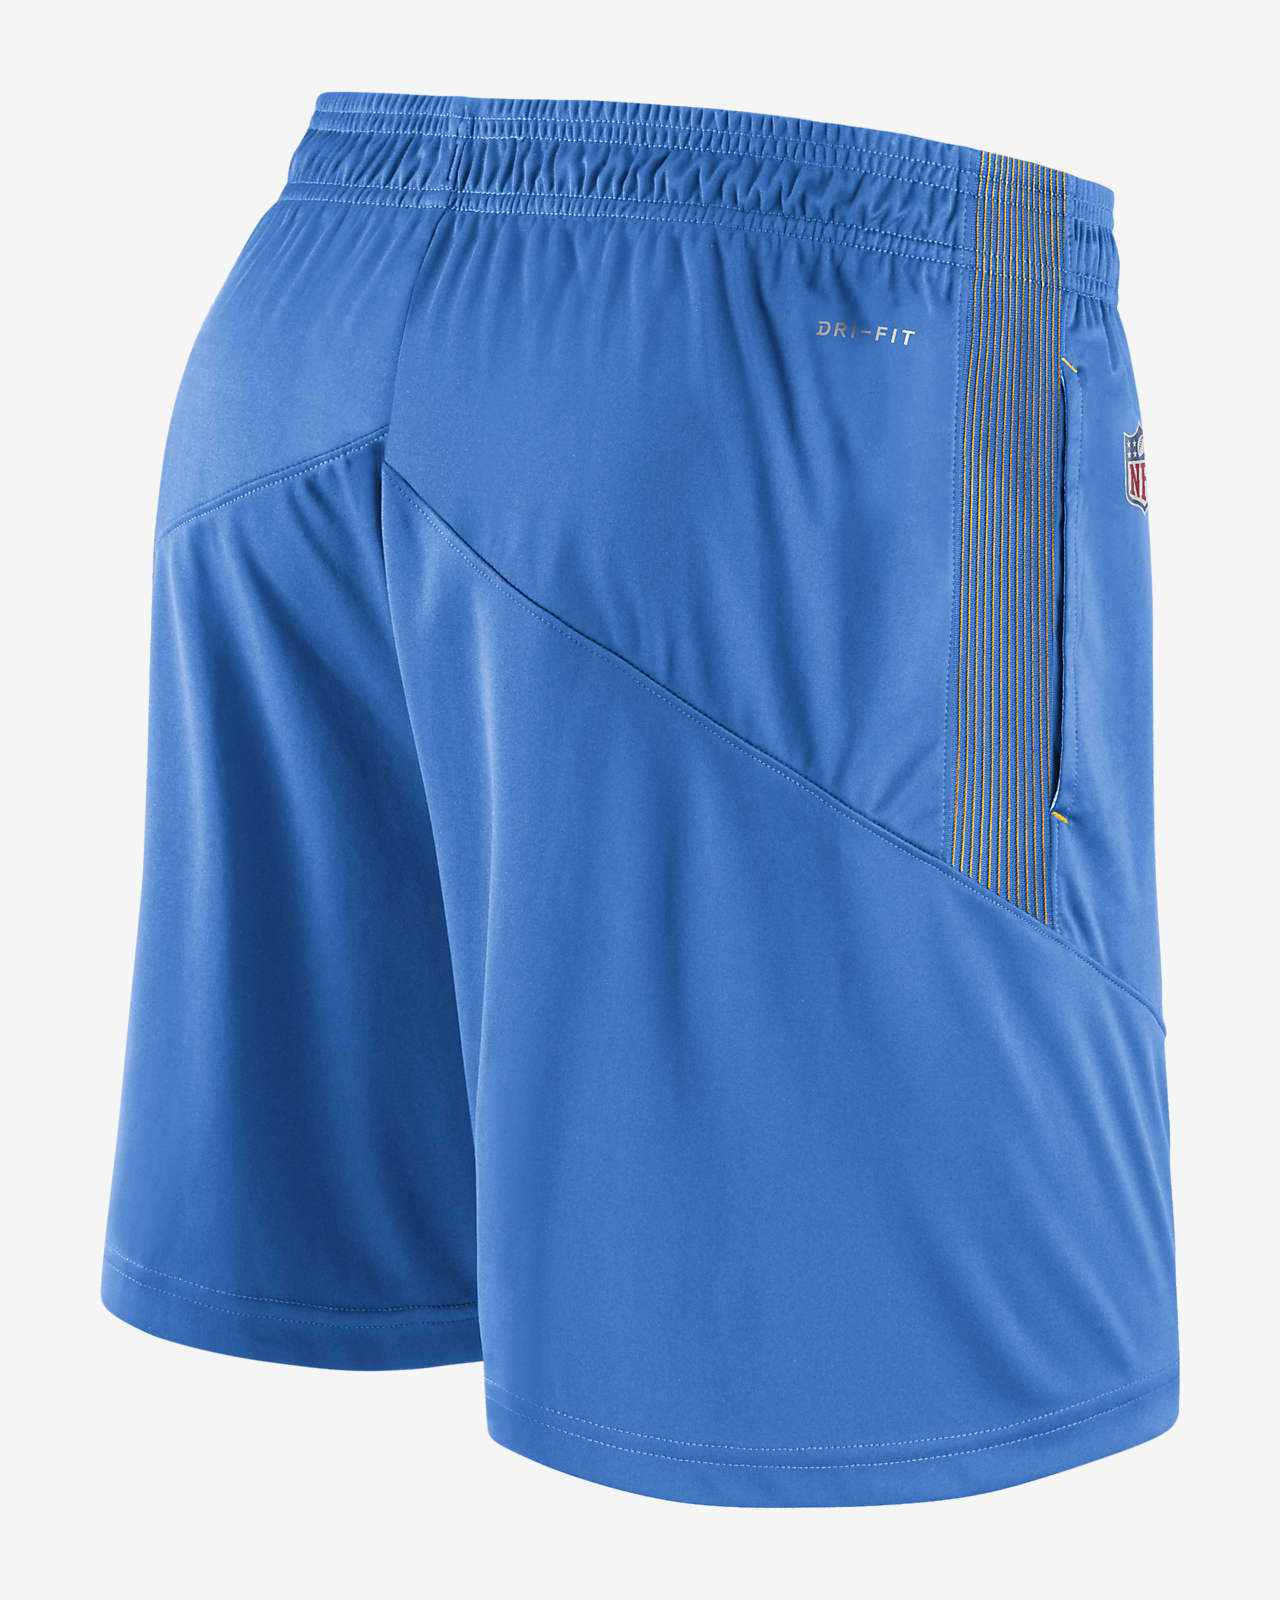 Los Angeles Chargers Loose Sport Shorts Men Cool Summer Football Short Pants